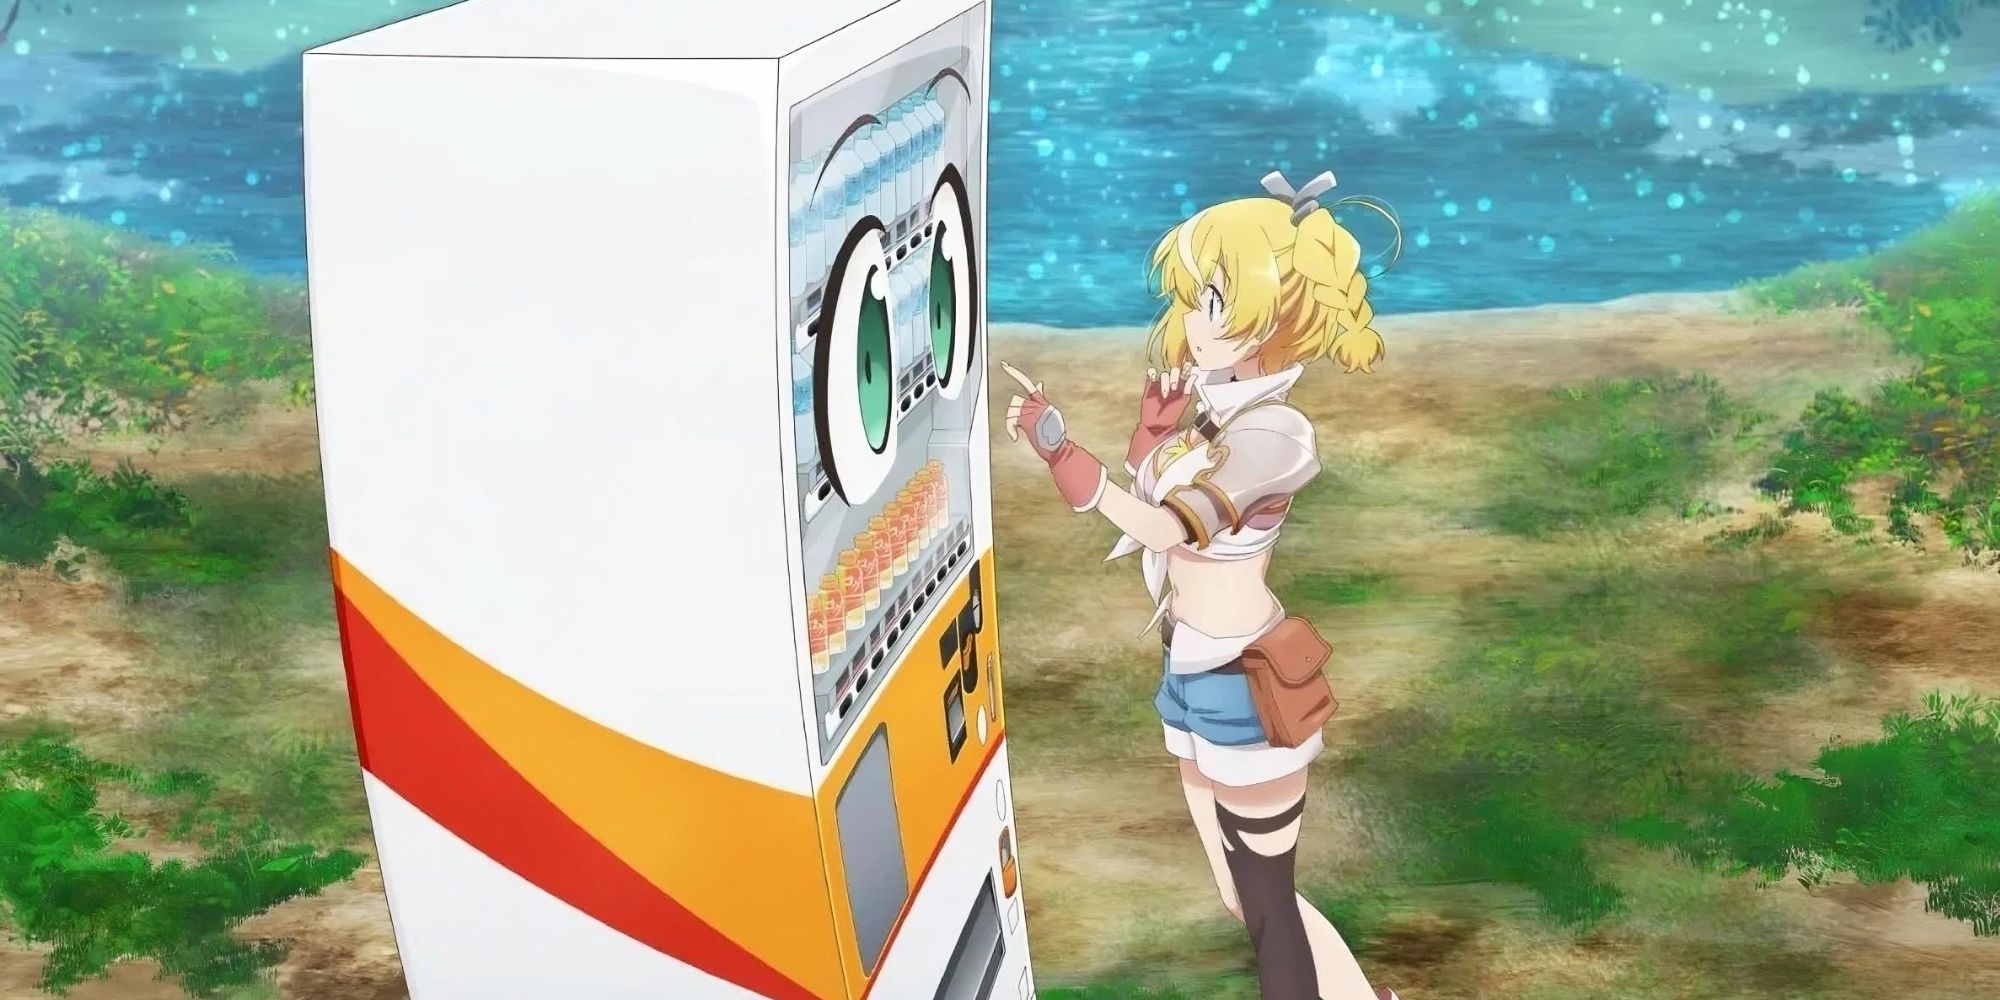 Lammis touching on Boxxo in Reborn as a Vending Machine isekai anime